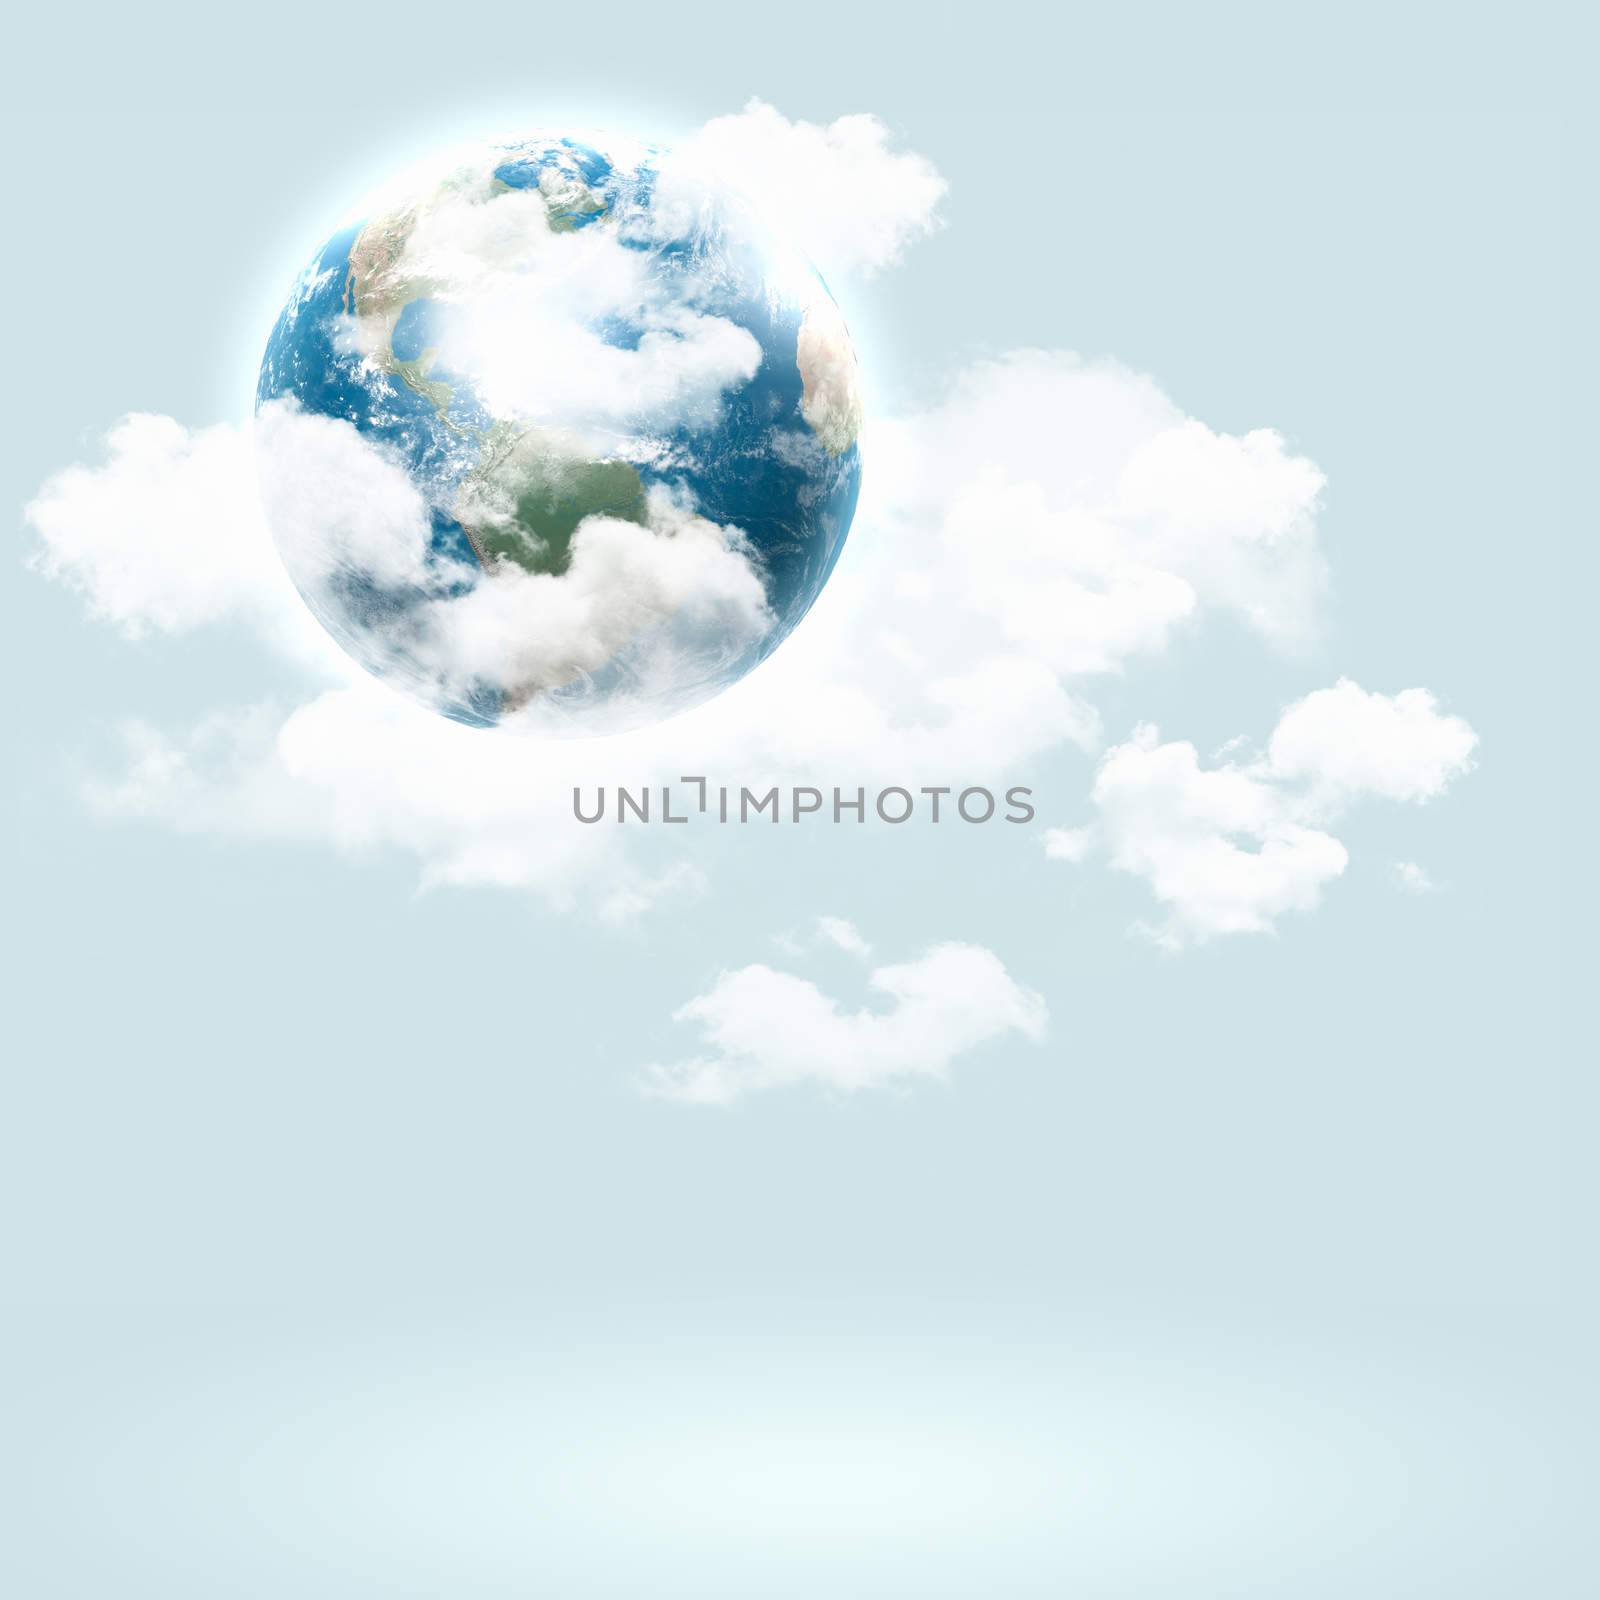 Background image with globe illustration by sergey_nivens